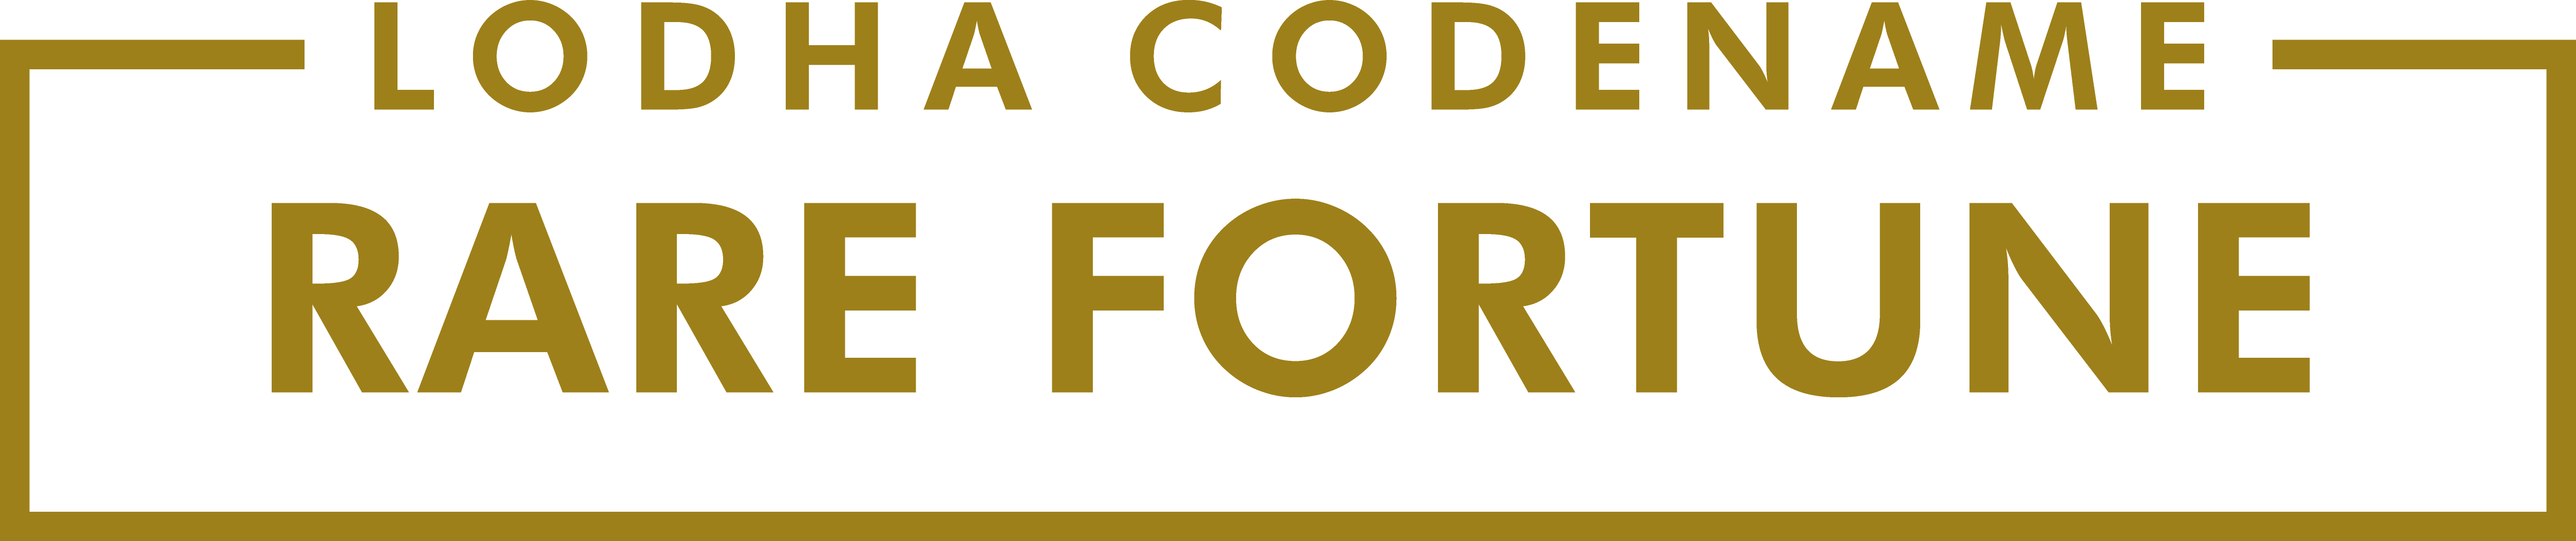 Lodha Codename Rare Fortune Vikhroli logo